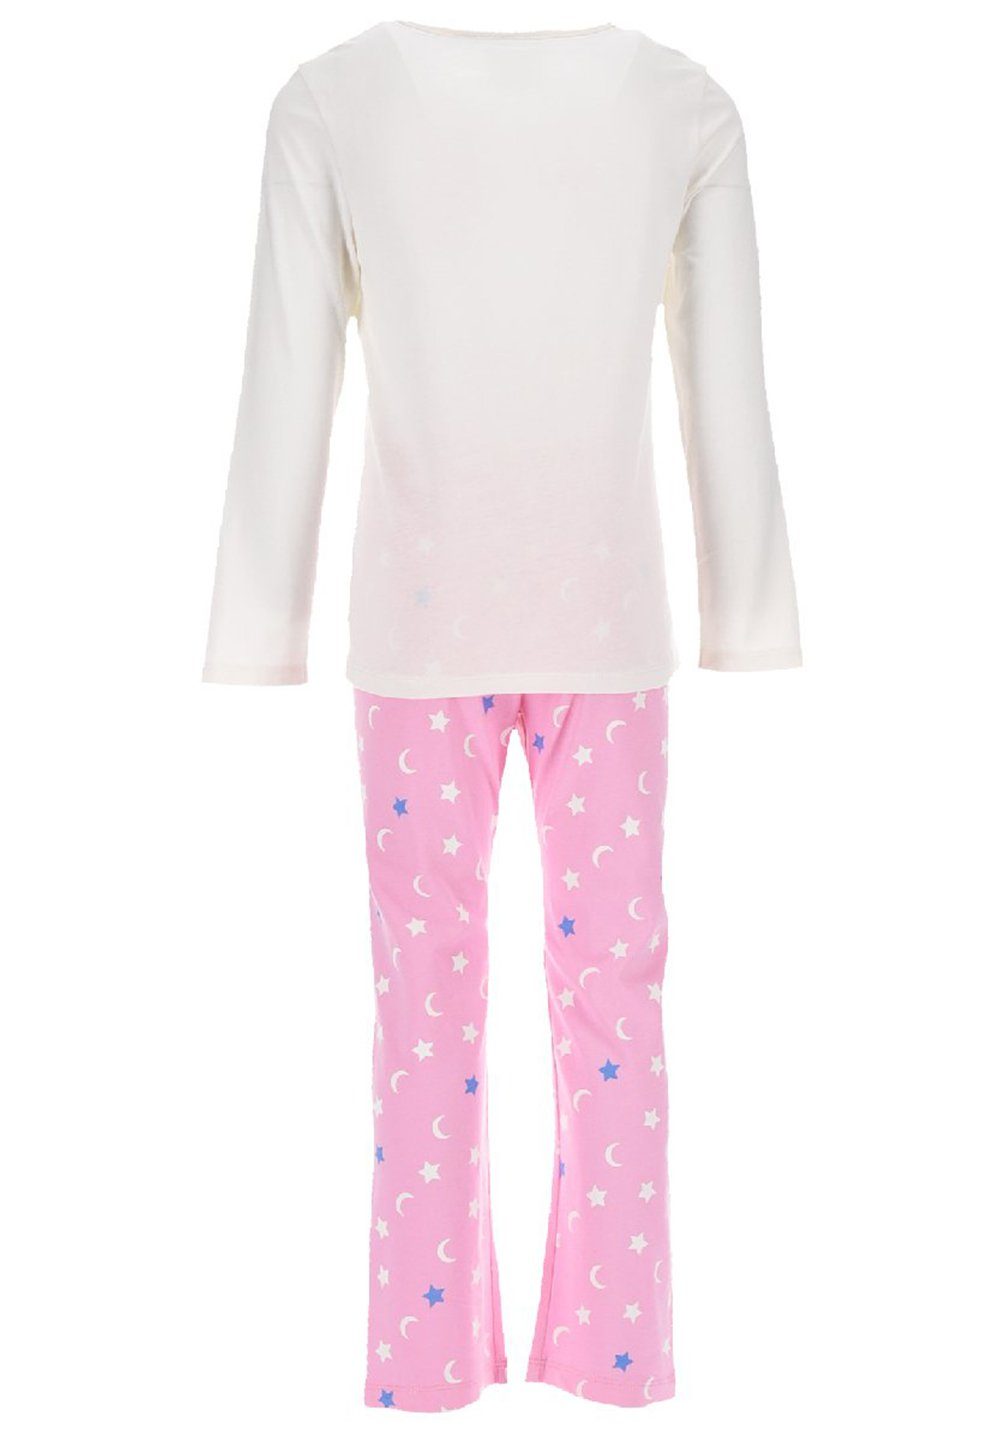 L.O.L. Weiß + Schlafanzug Langarm SURPRISE! Schlaf-Hose Shirt Mädchen Kinder Pyjama Schlafanzug Kinder